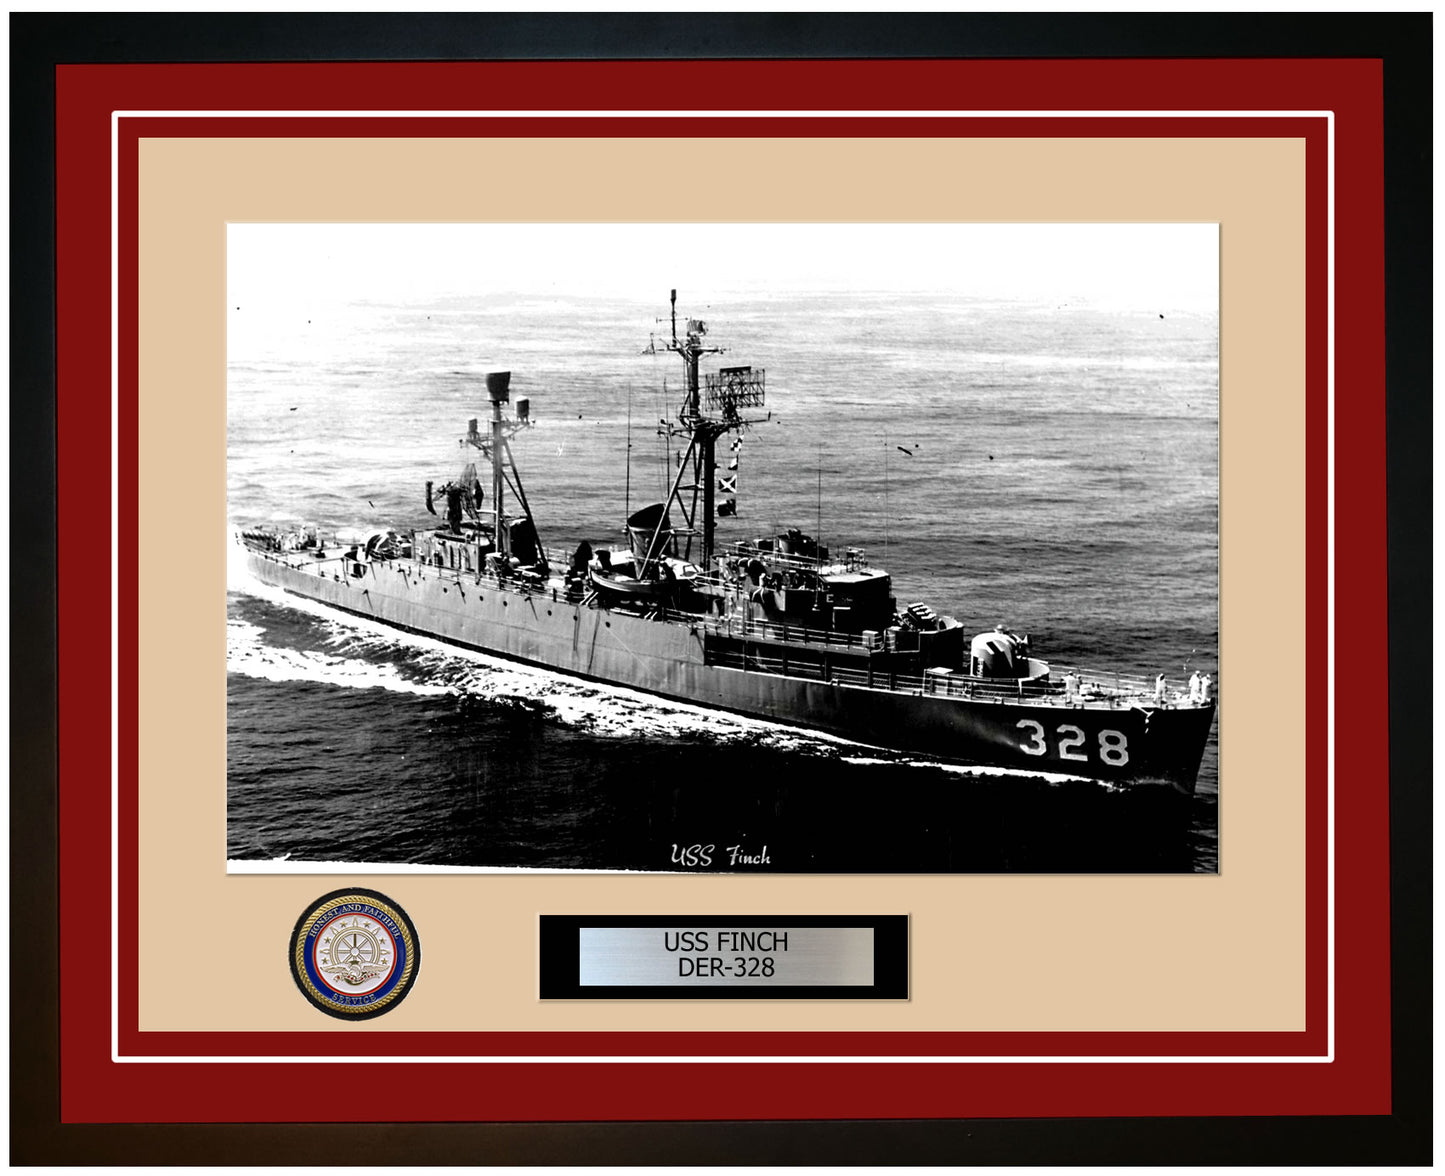 USS Finch DER-328 Framed Navy Ship Photo Burgundy